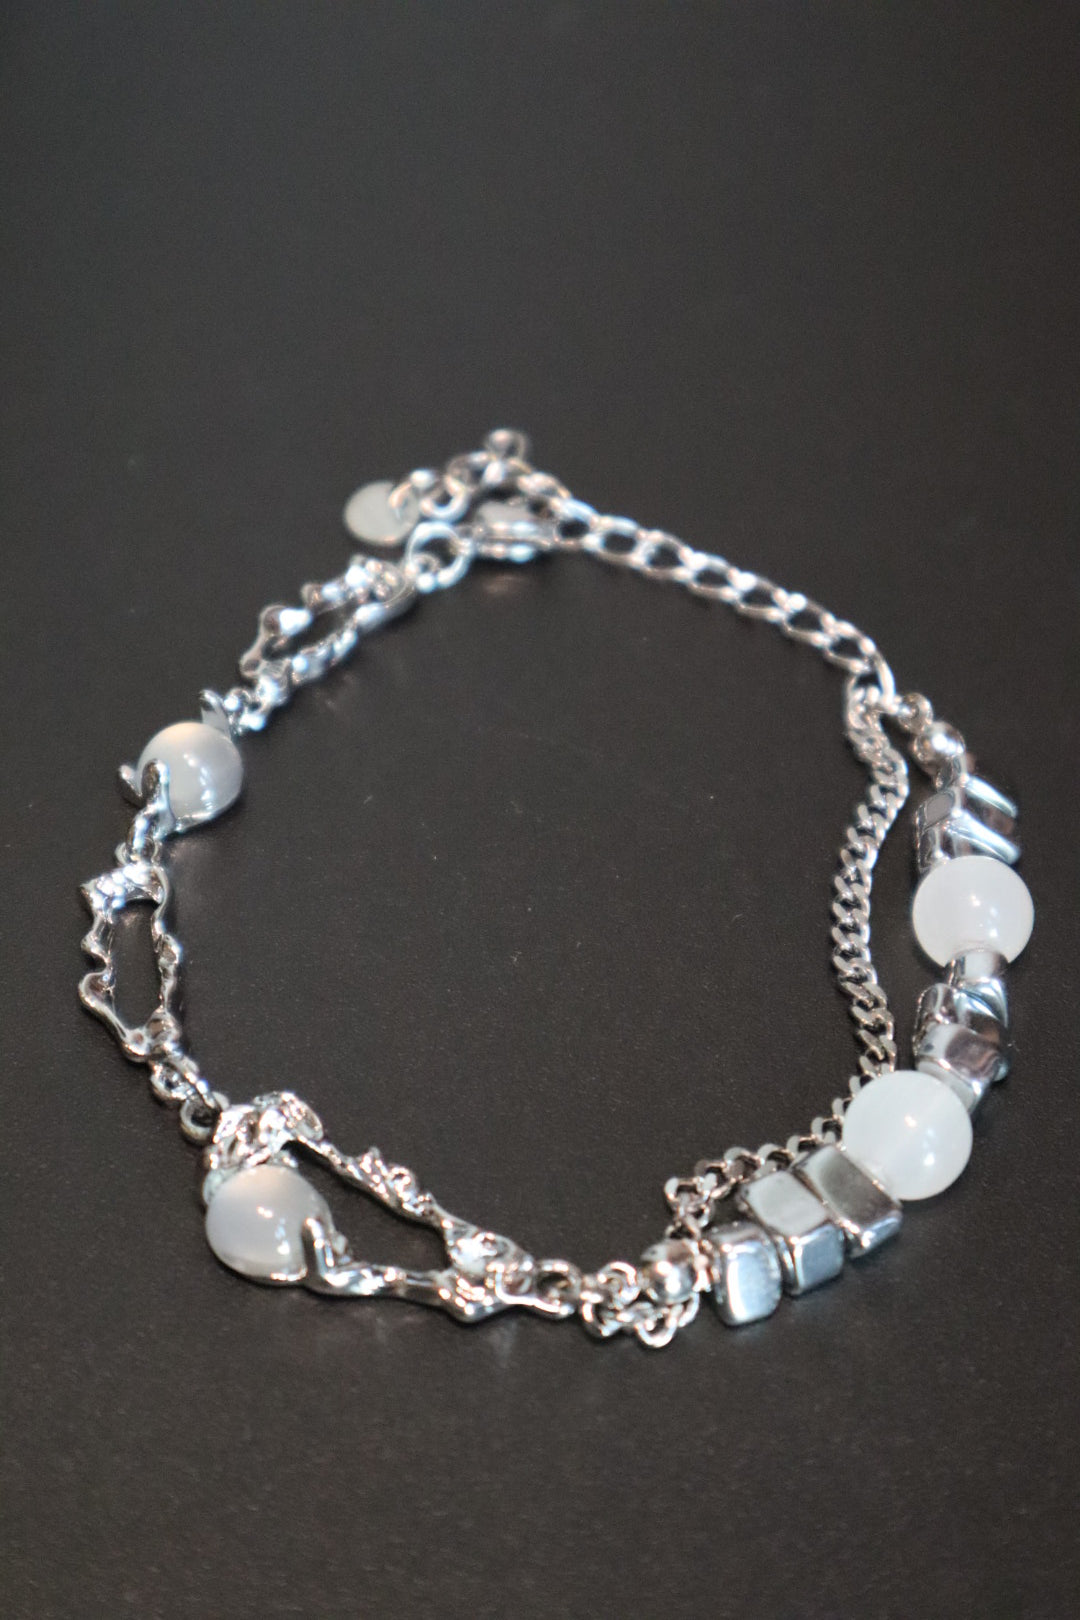 Moonlight Silver Bracelet